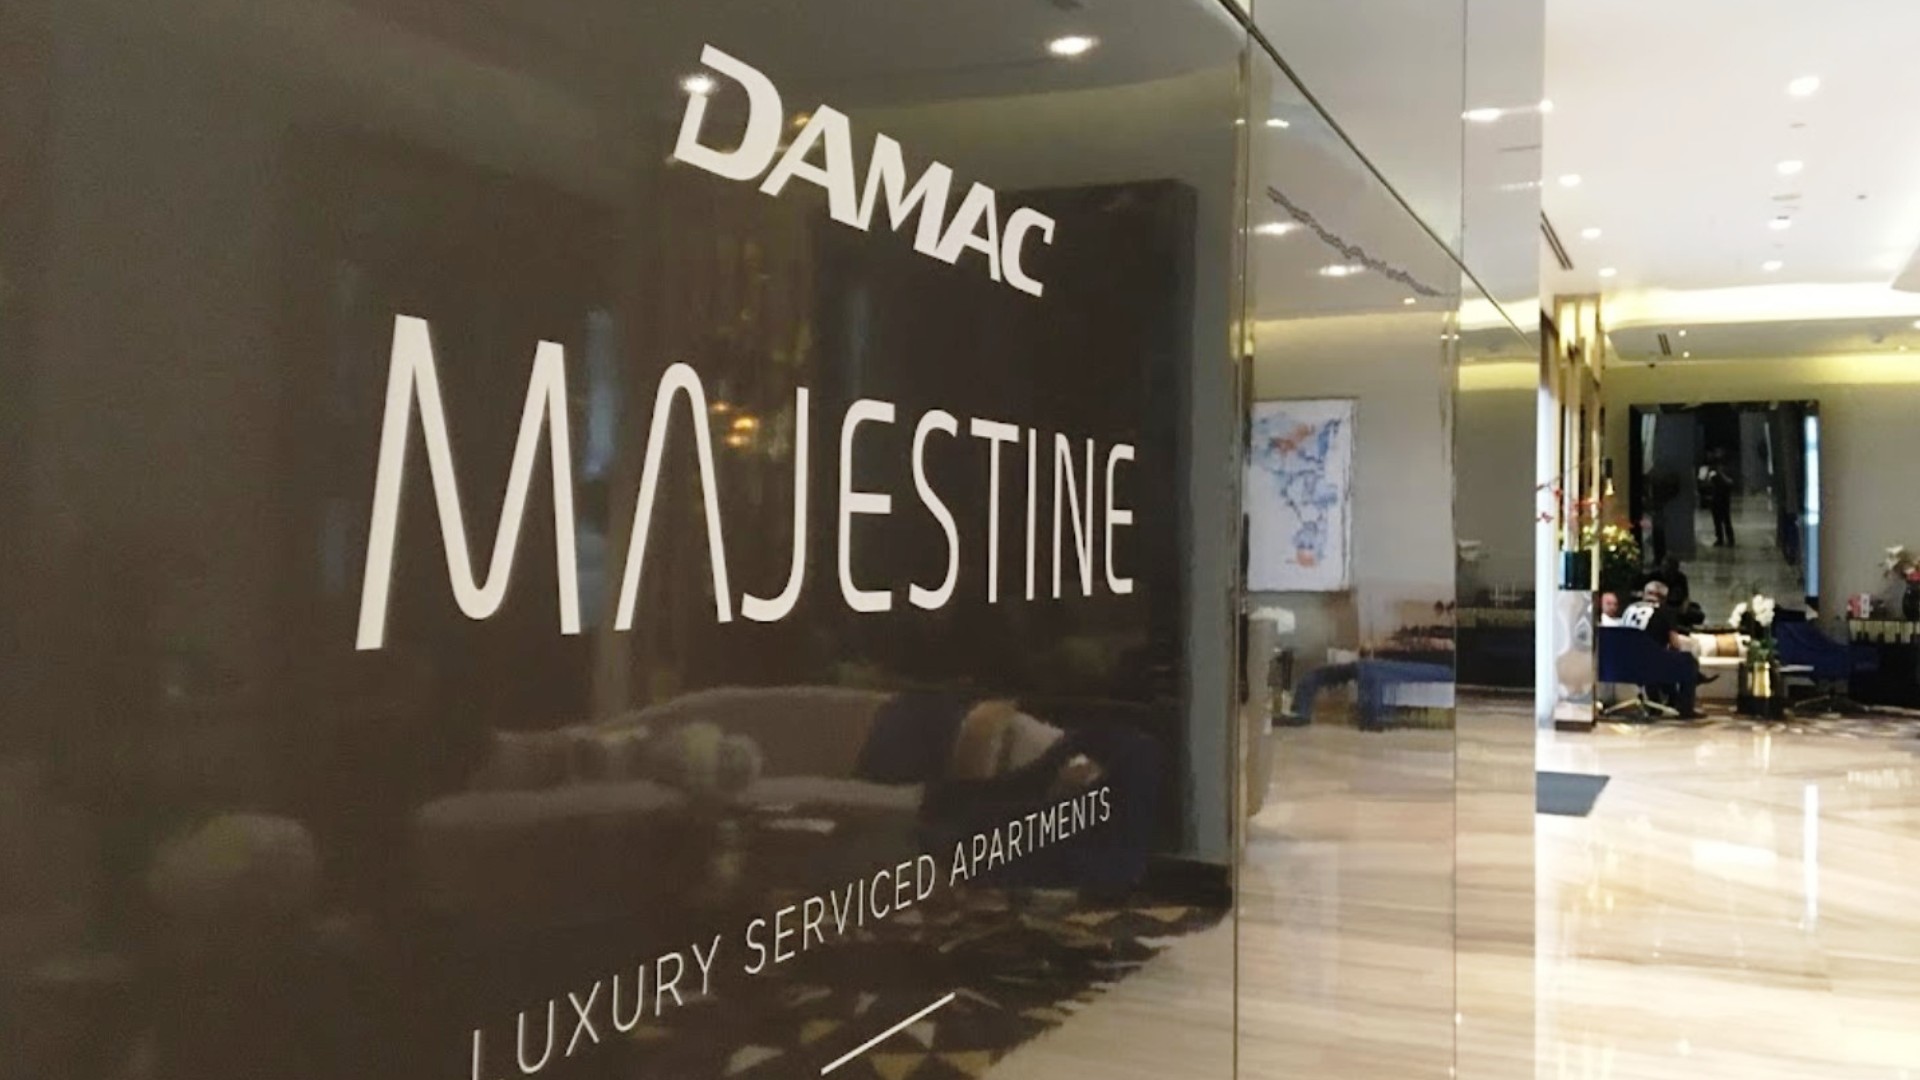 DAMAC MAISON MAJESTINE by Damac Properties in Downtown Dubai, Dubai - 7